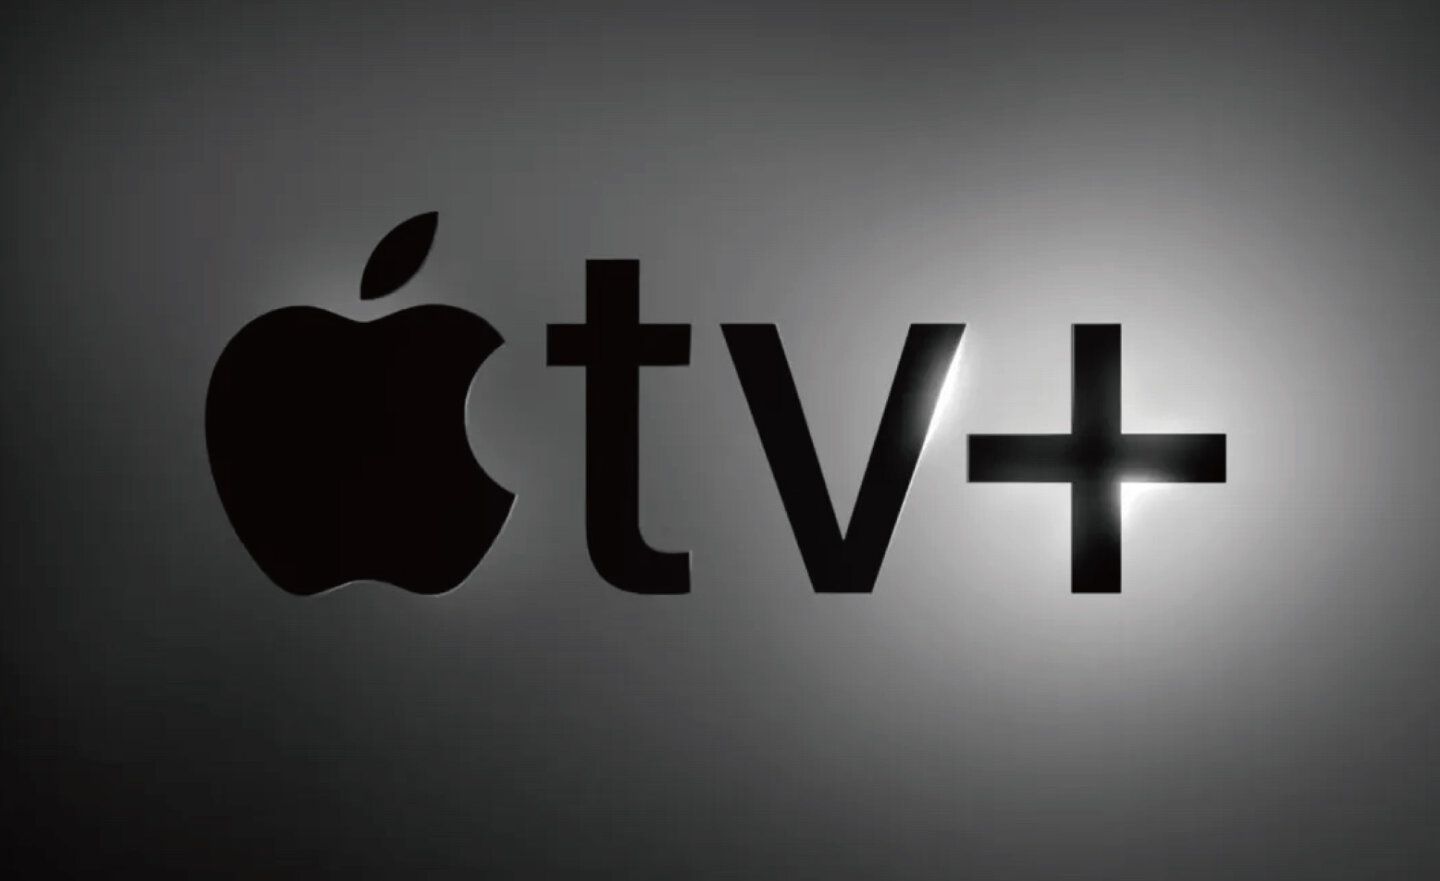 Apple TV+ 在美國的市占率雖然成長，但仍然落後競爭對手